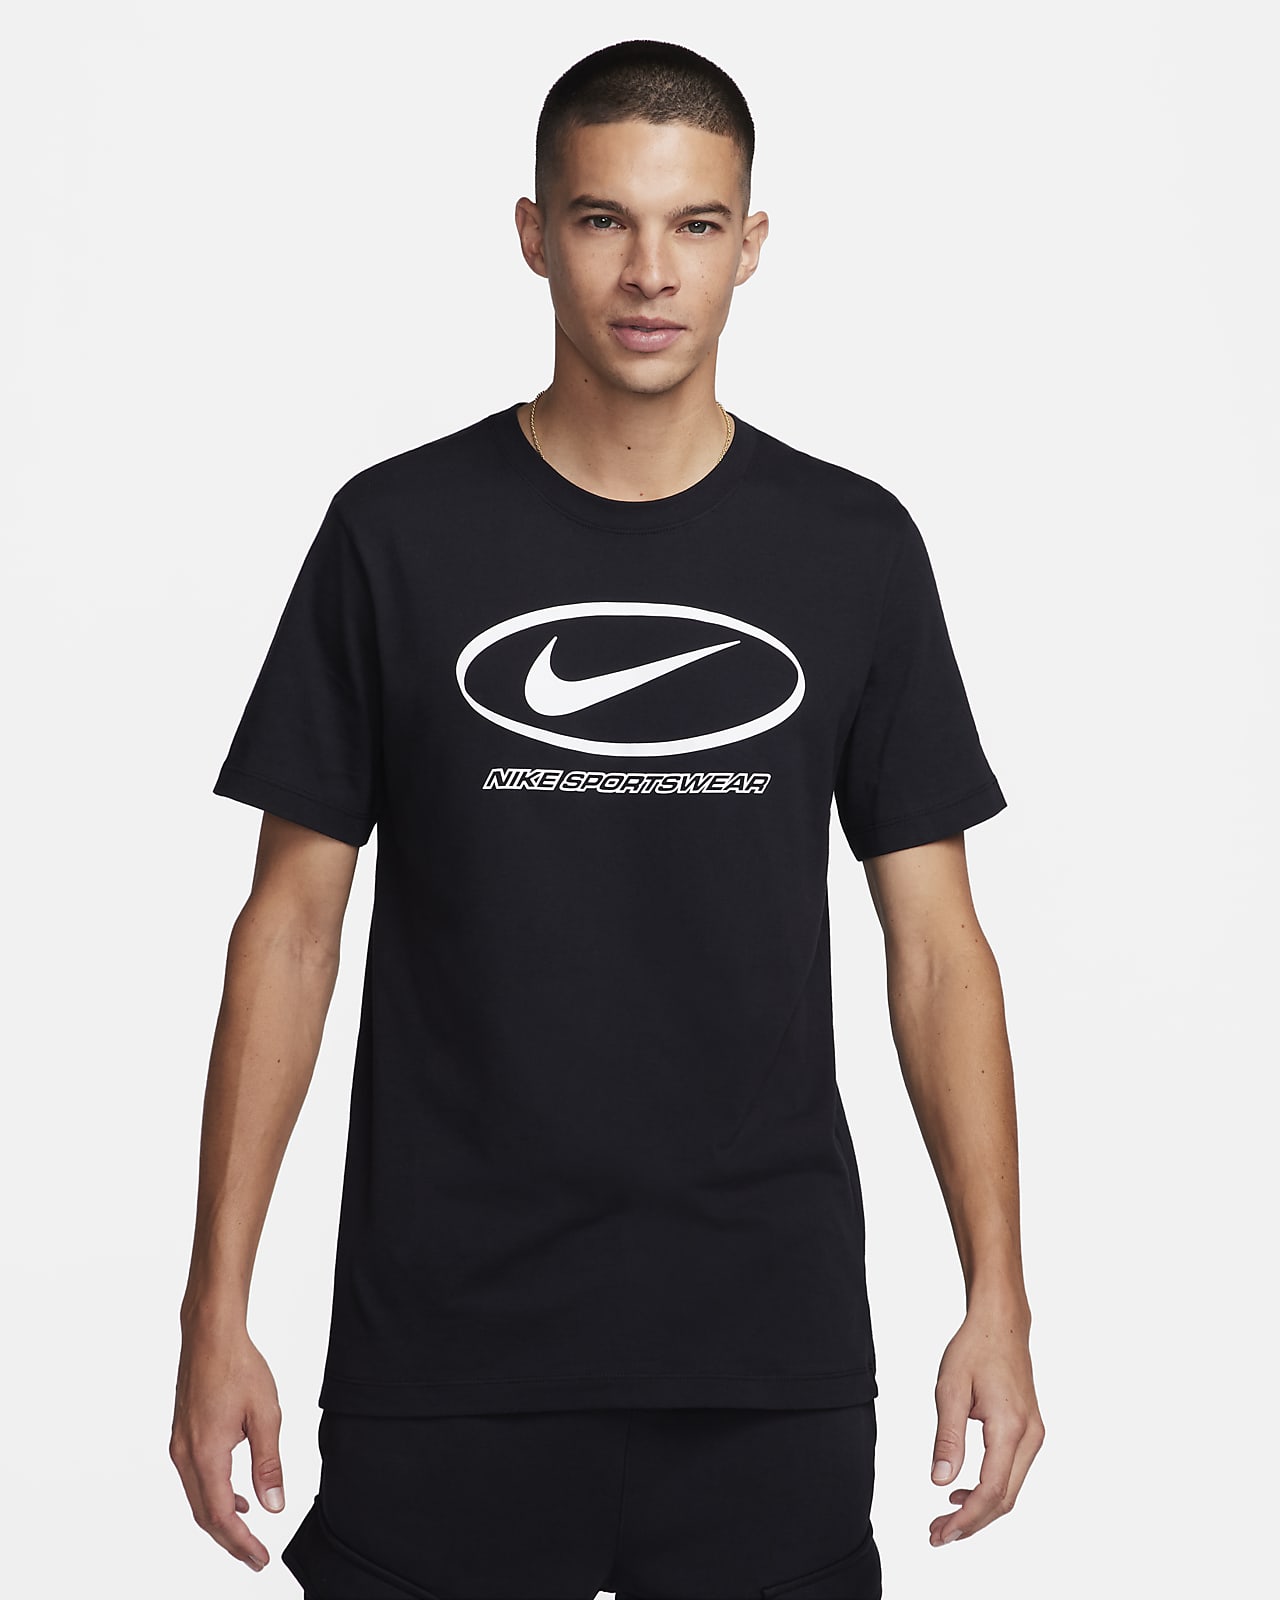 Nike Sportswear Herren-T-Shirt mit Grafik